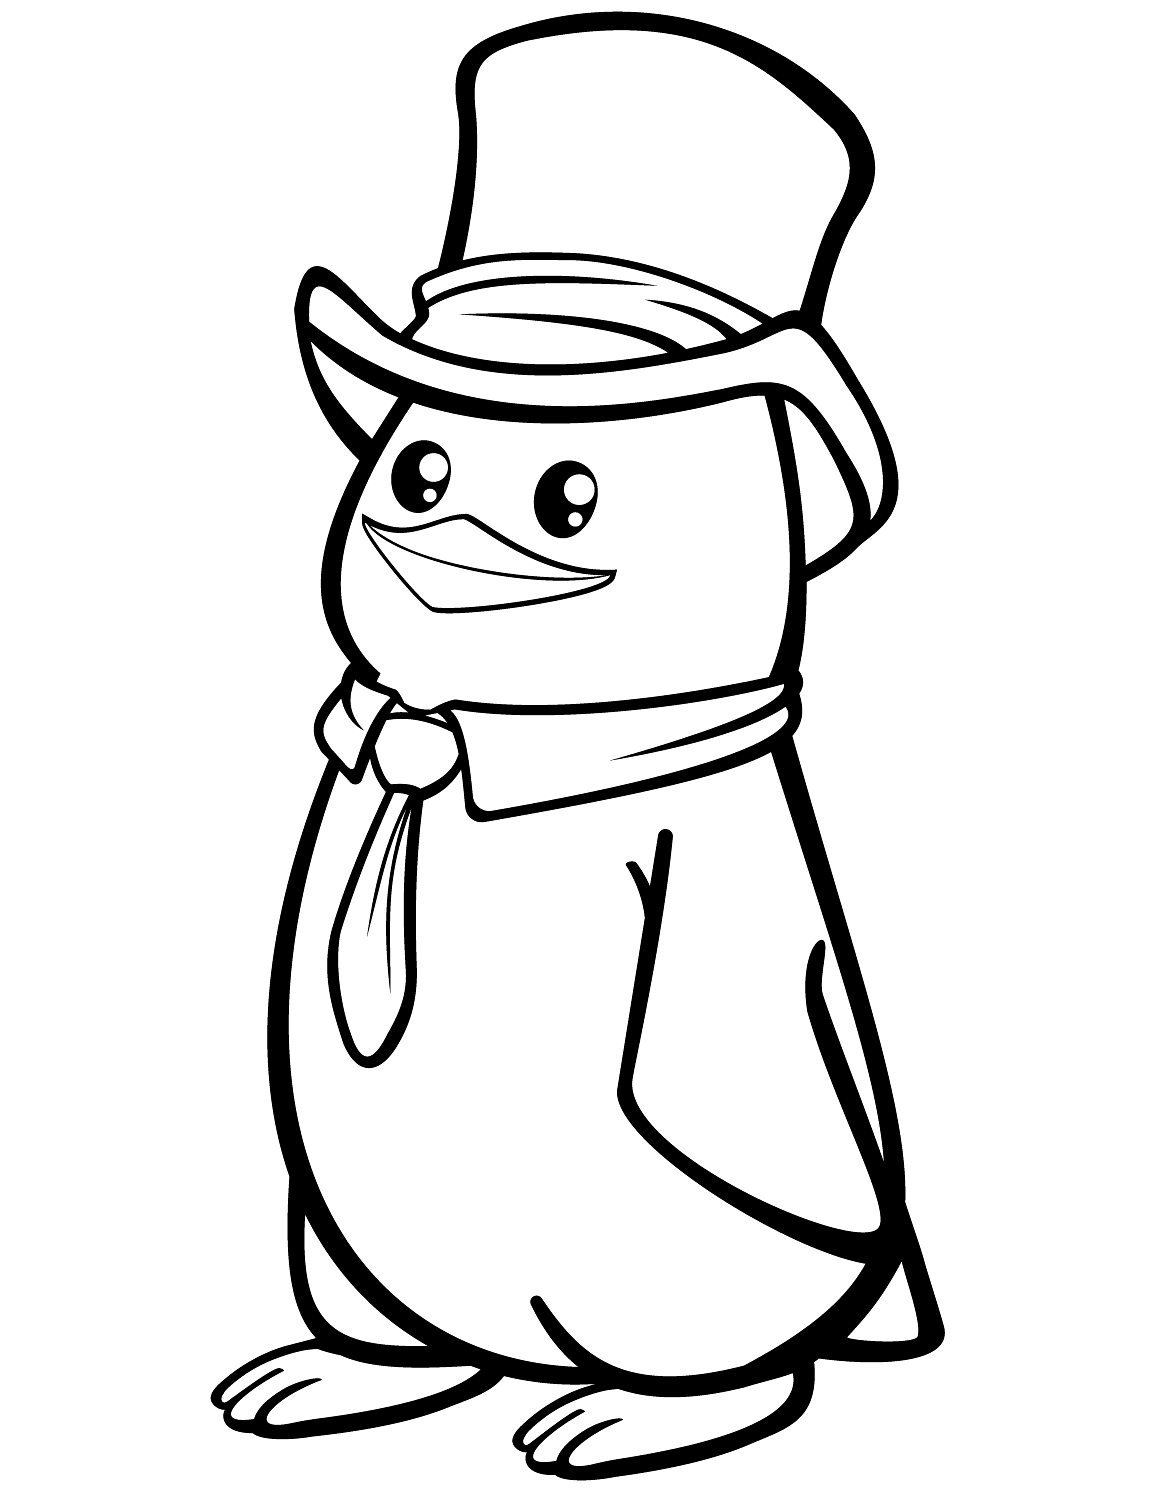 Coloring page Penguin Mr. Penguin